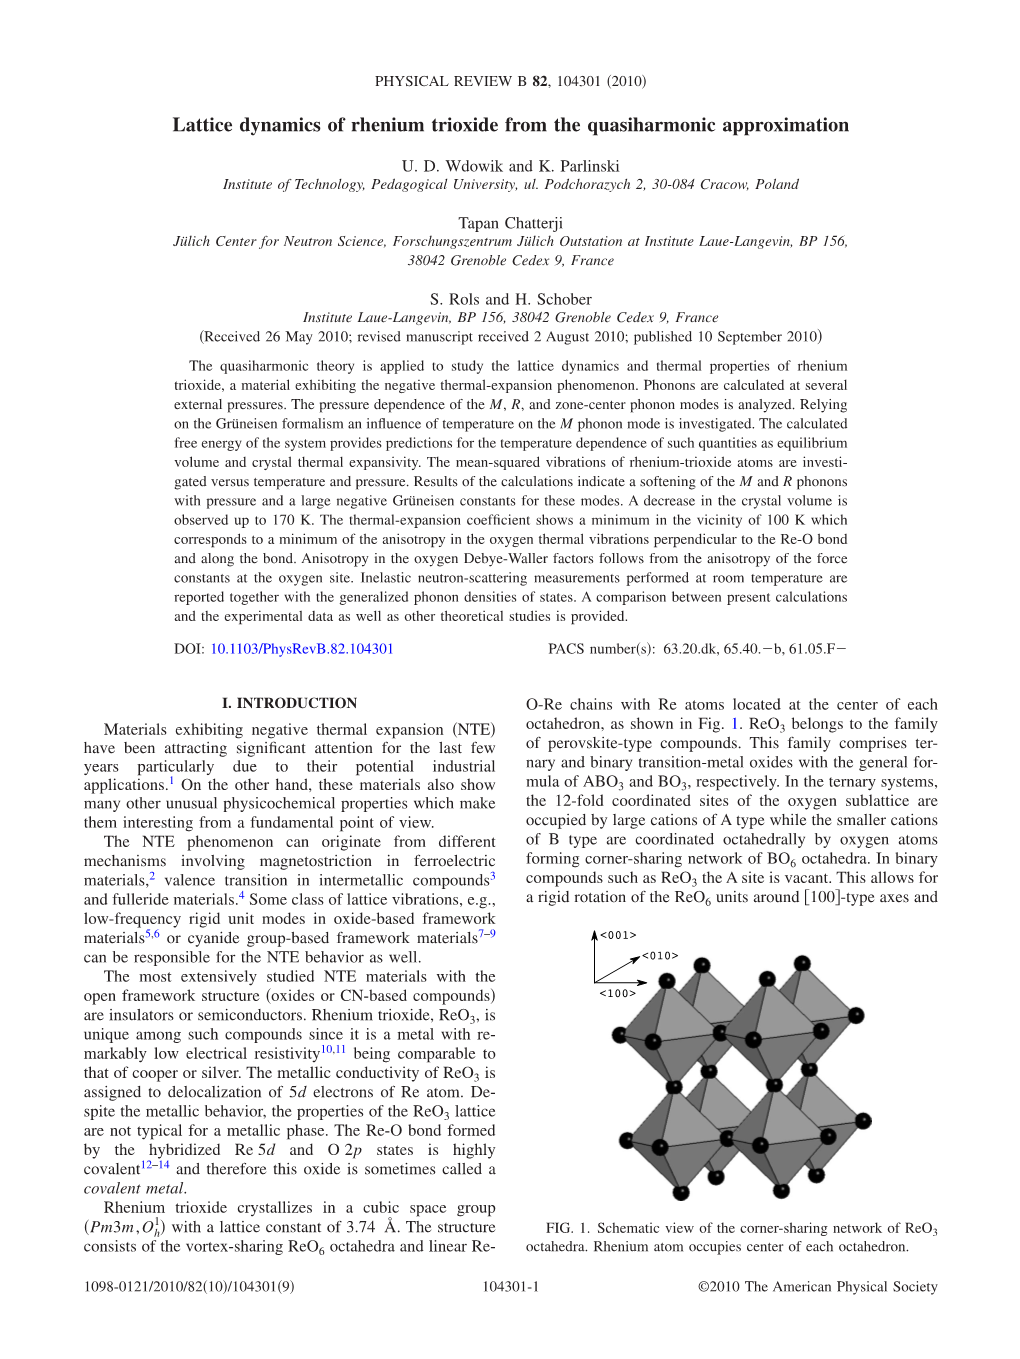 Lattice Dynamics of Rhenium Trioxide from the Quasiharmonic Approximation